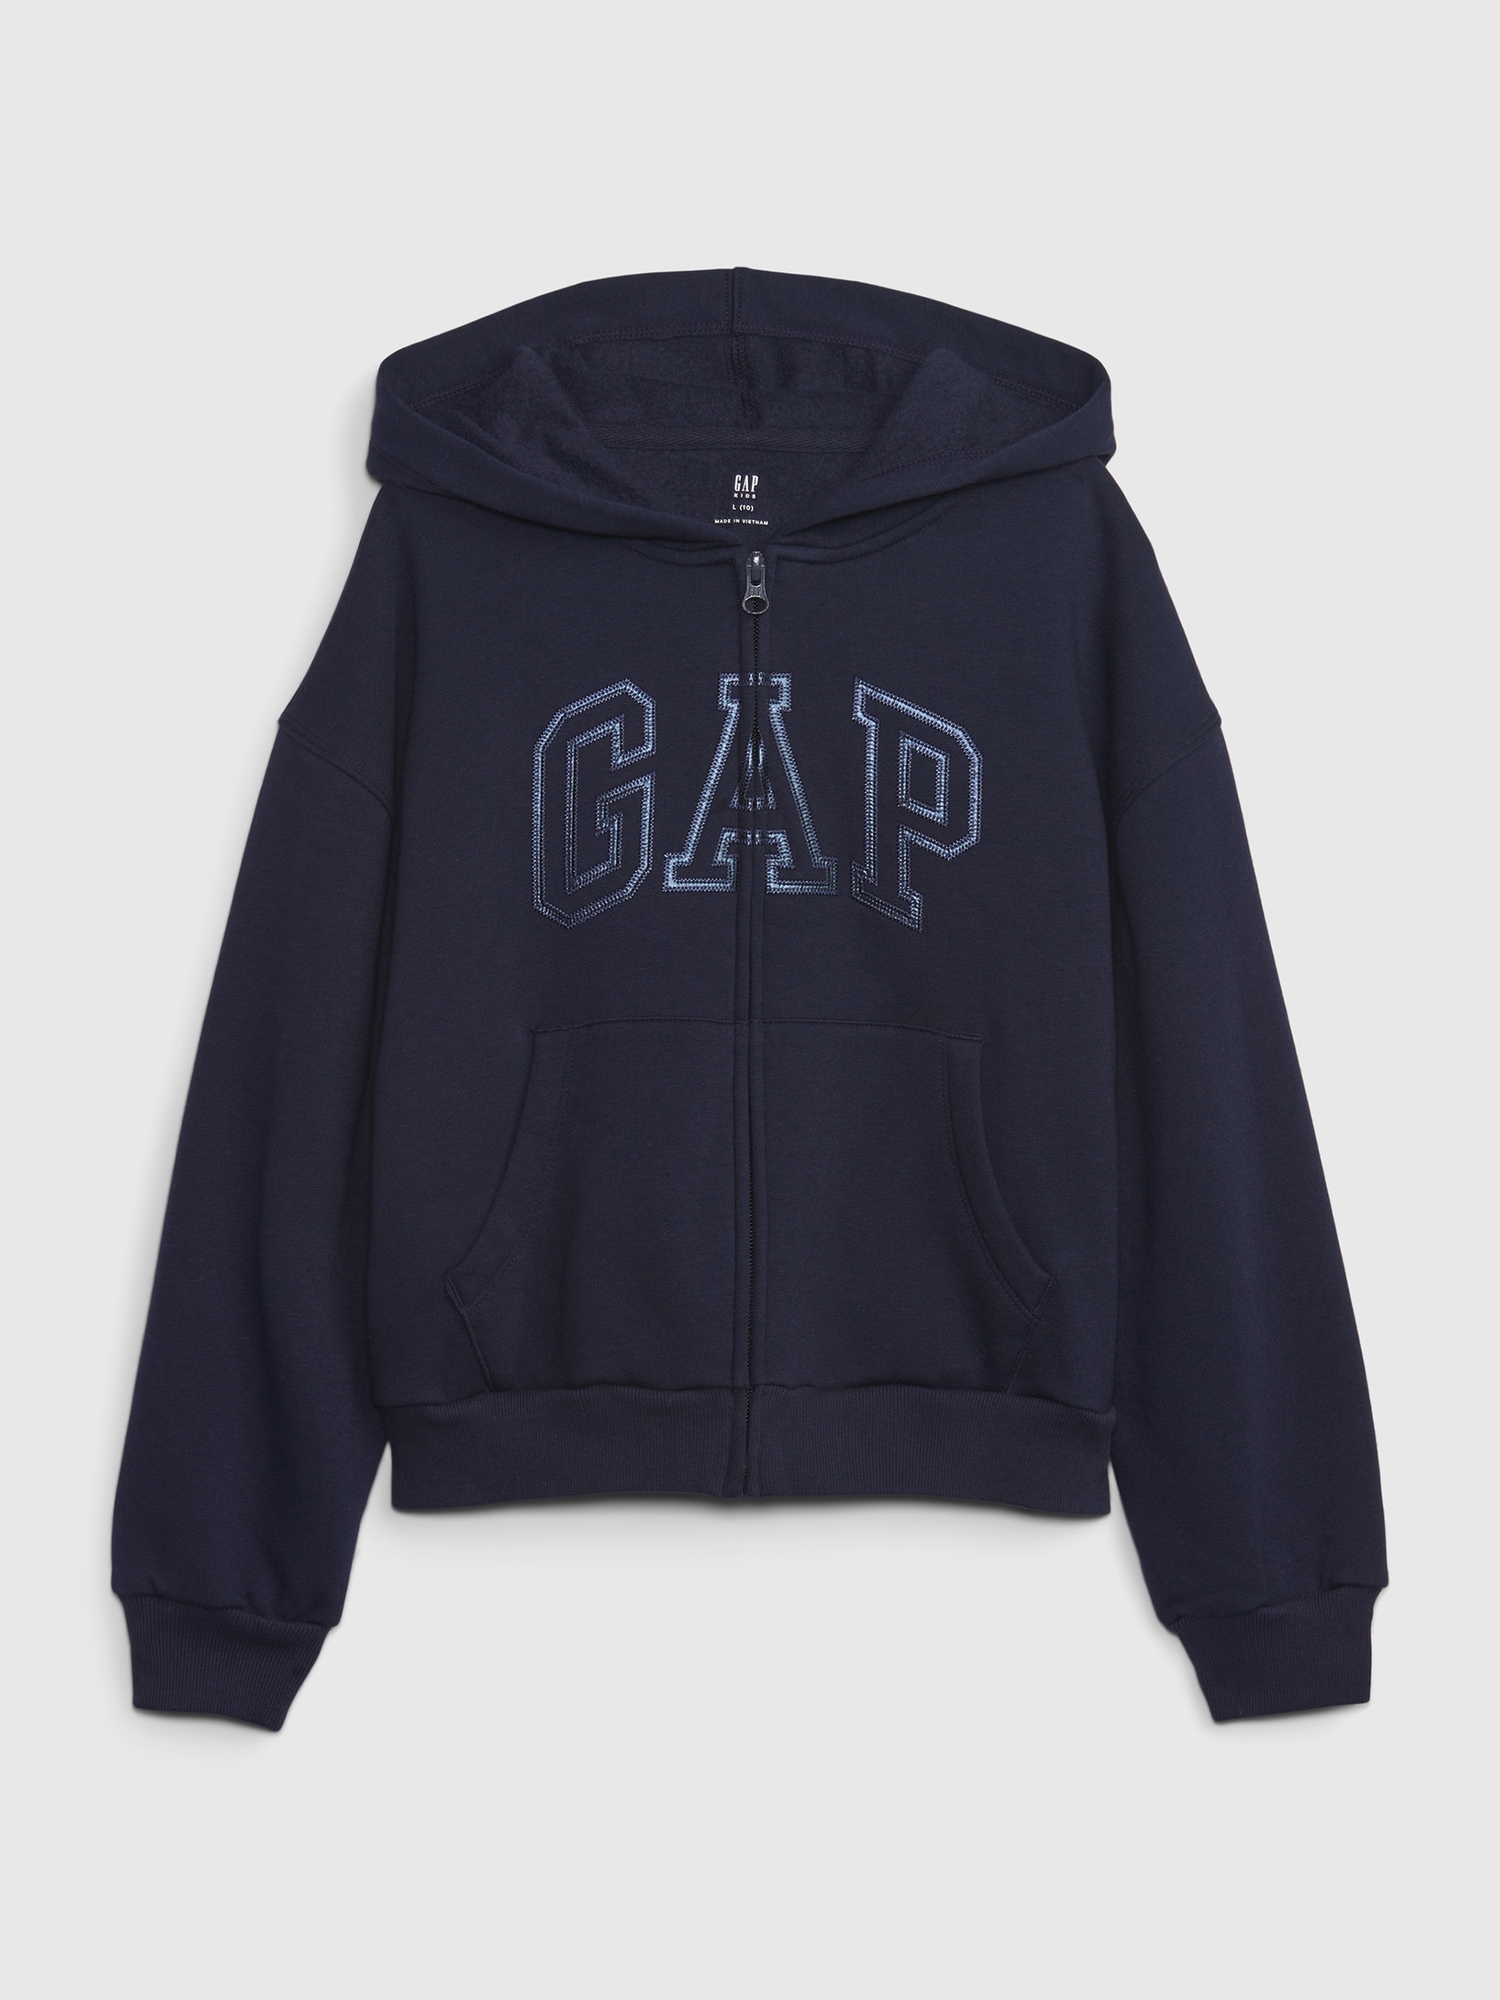 Kids Gap Arch Logo Hoodie